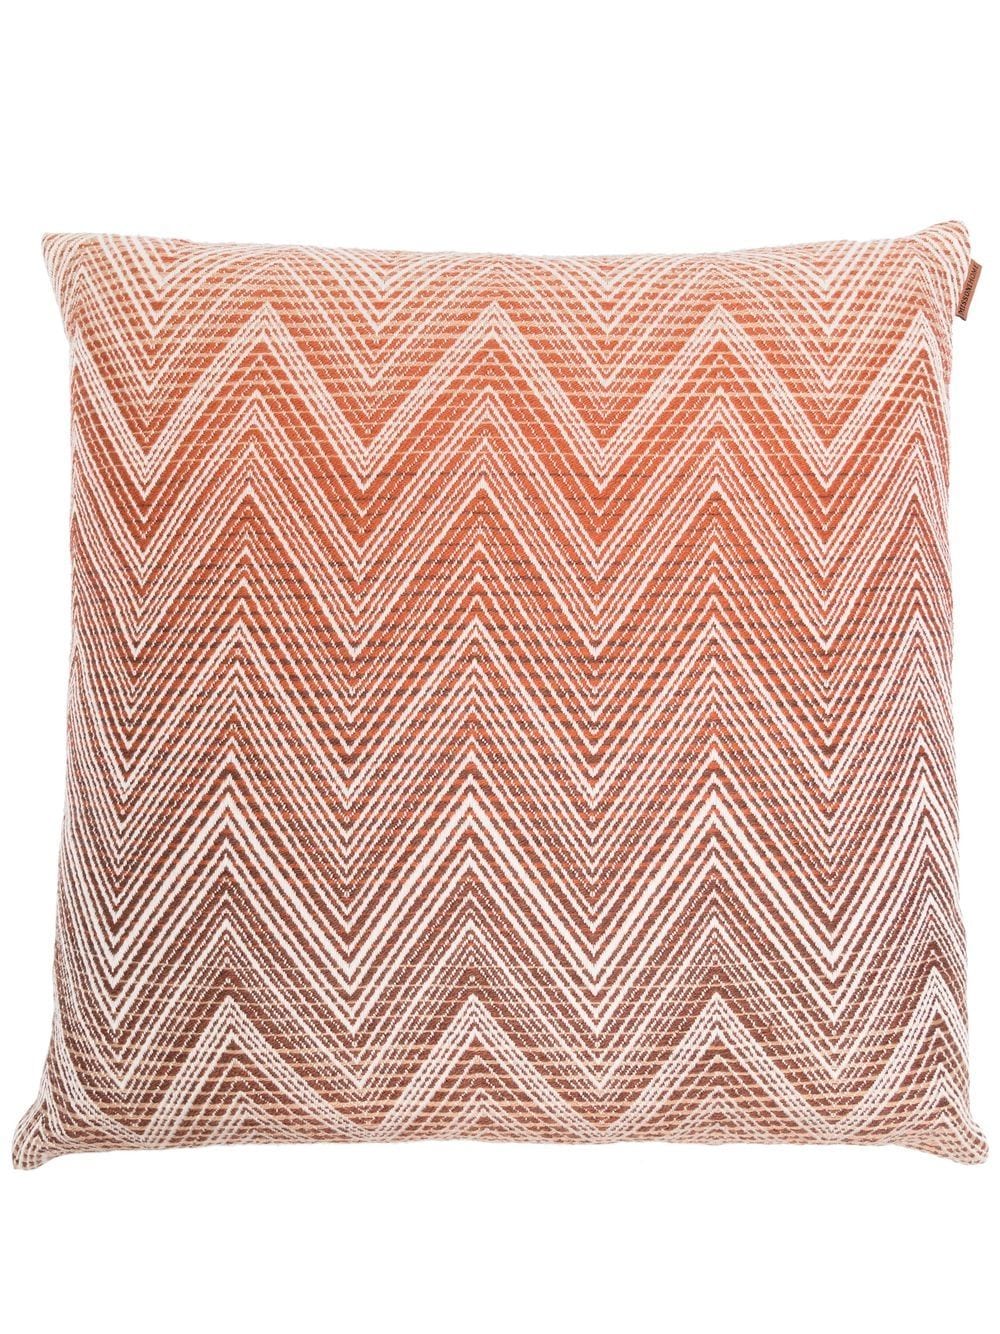 Missoni Home zig-zag pattern print cushion - Brown von Missoni Home